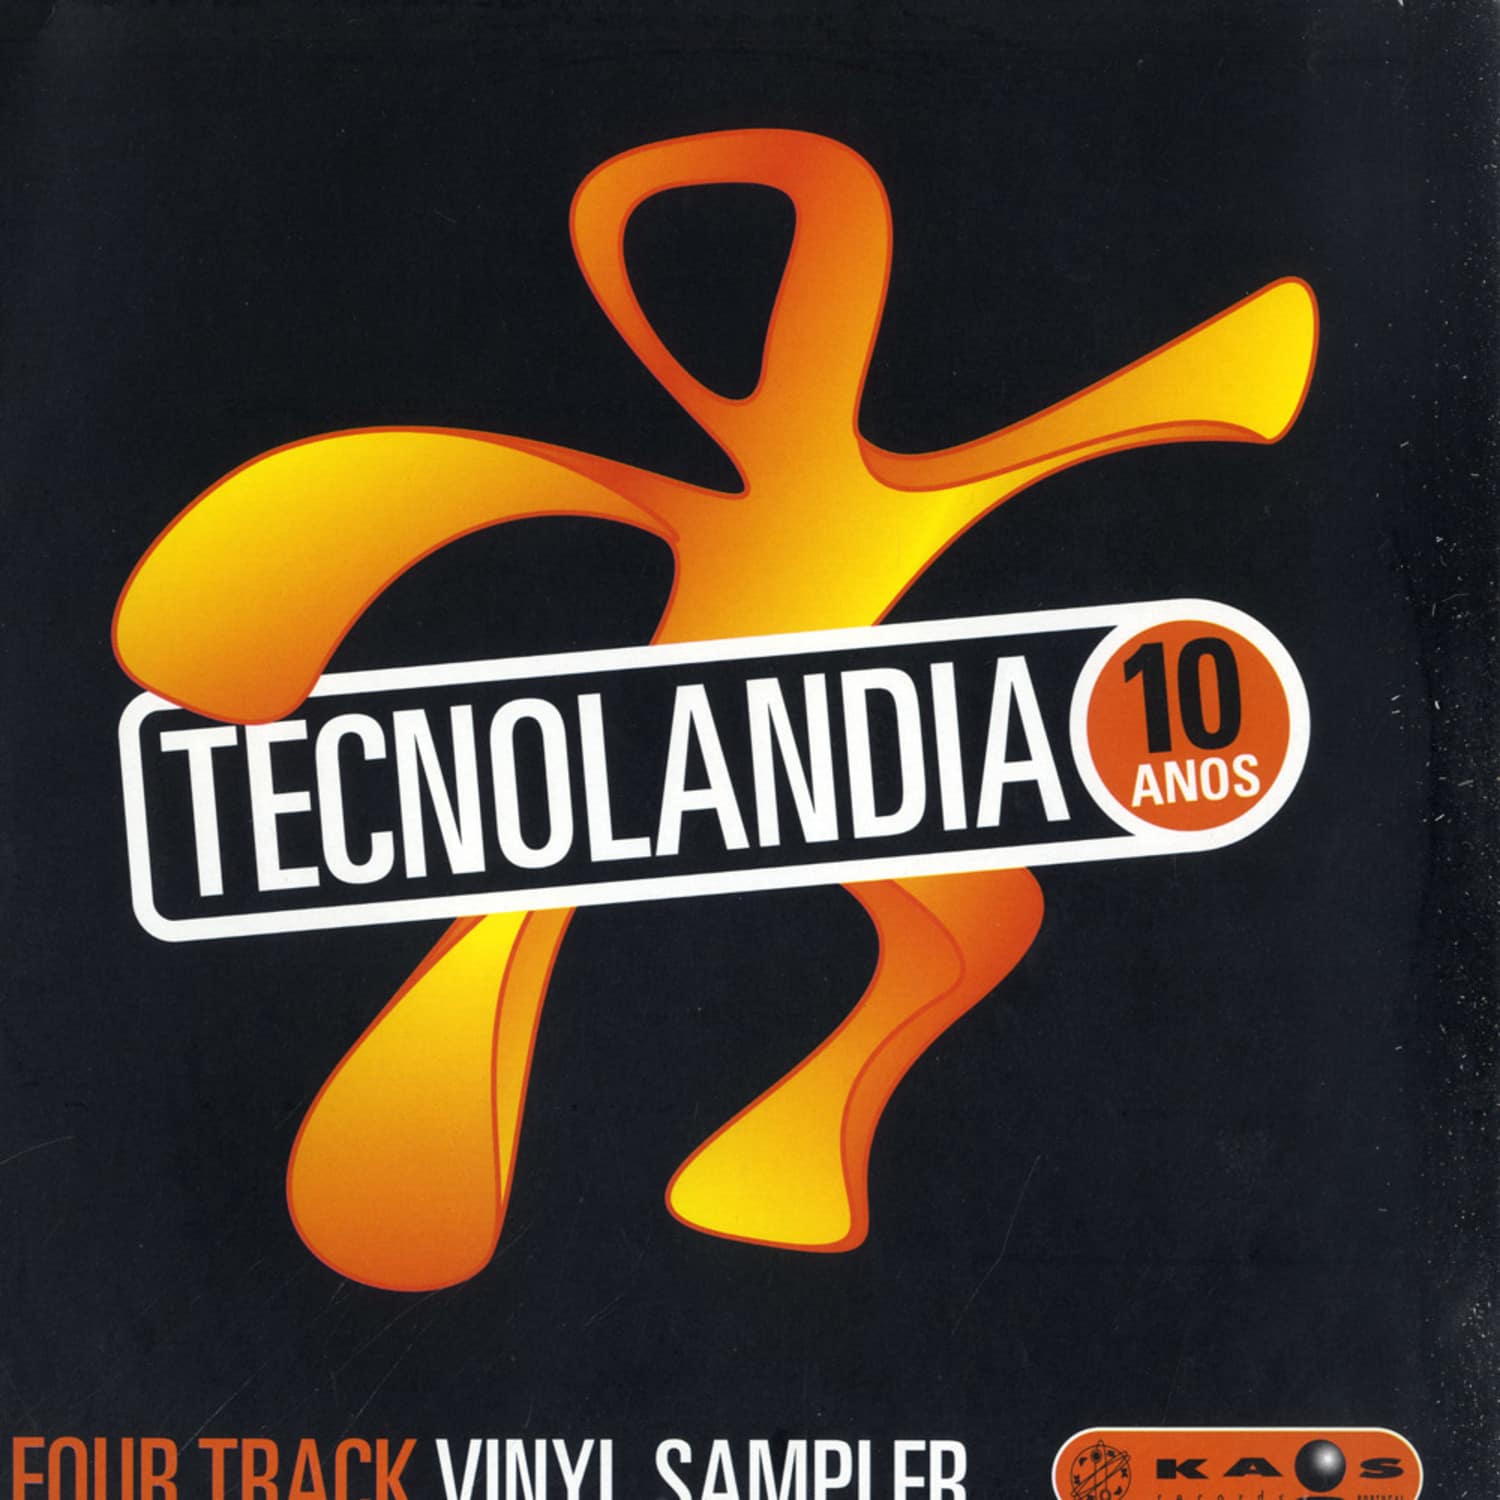 Various Artists - TECNOLANDIA 10 ANOS